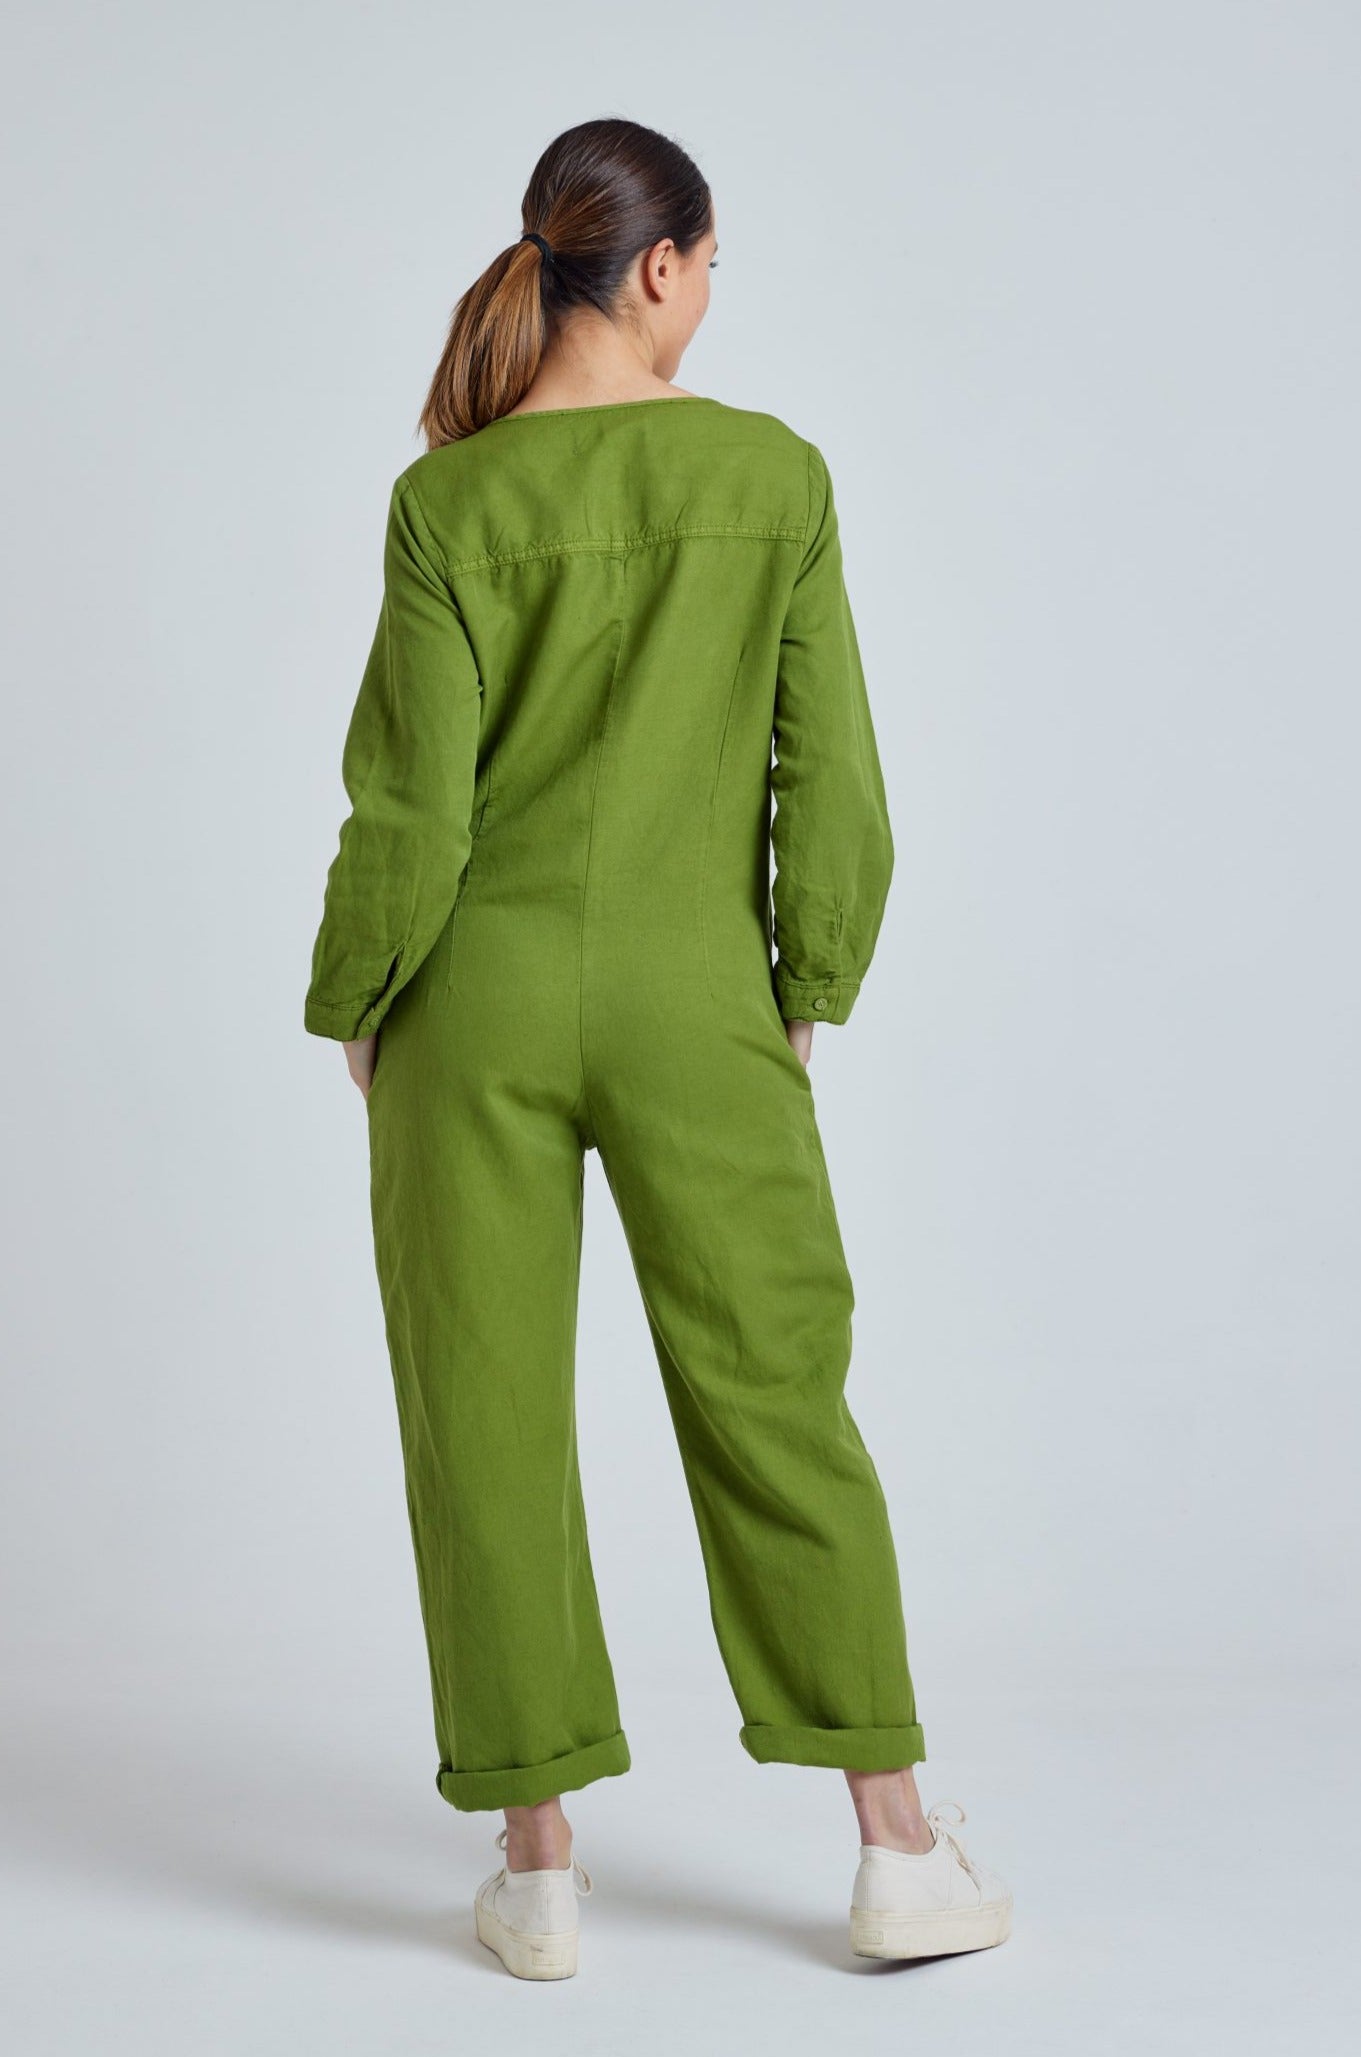 Spring Green Clara Jumpsuit - GOTS Certified Organic Cotton and Linen